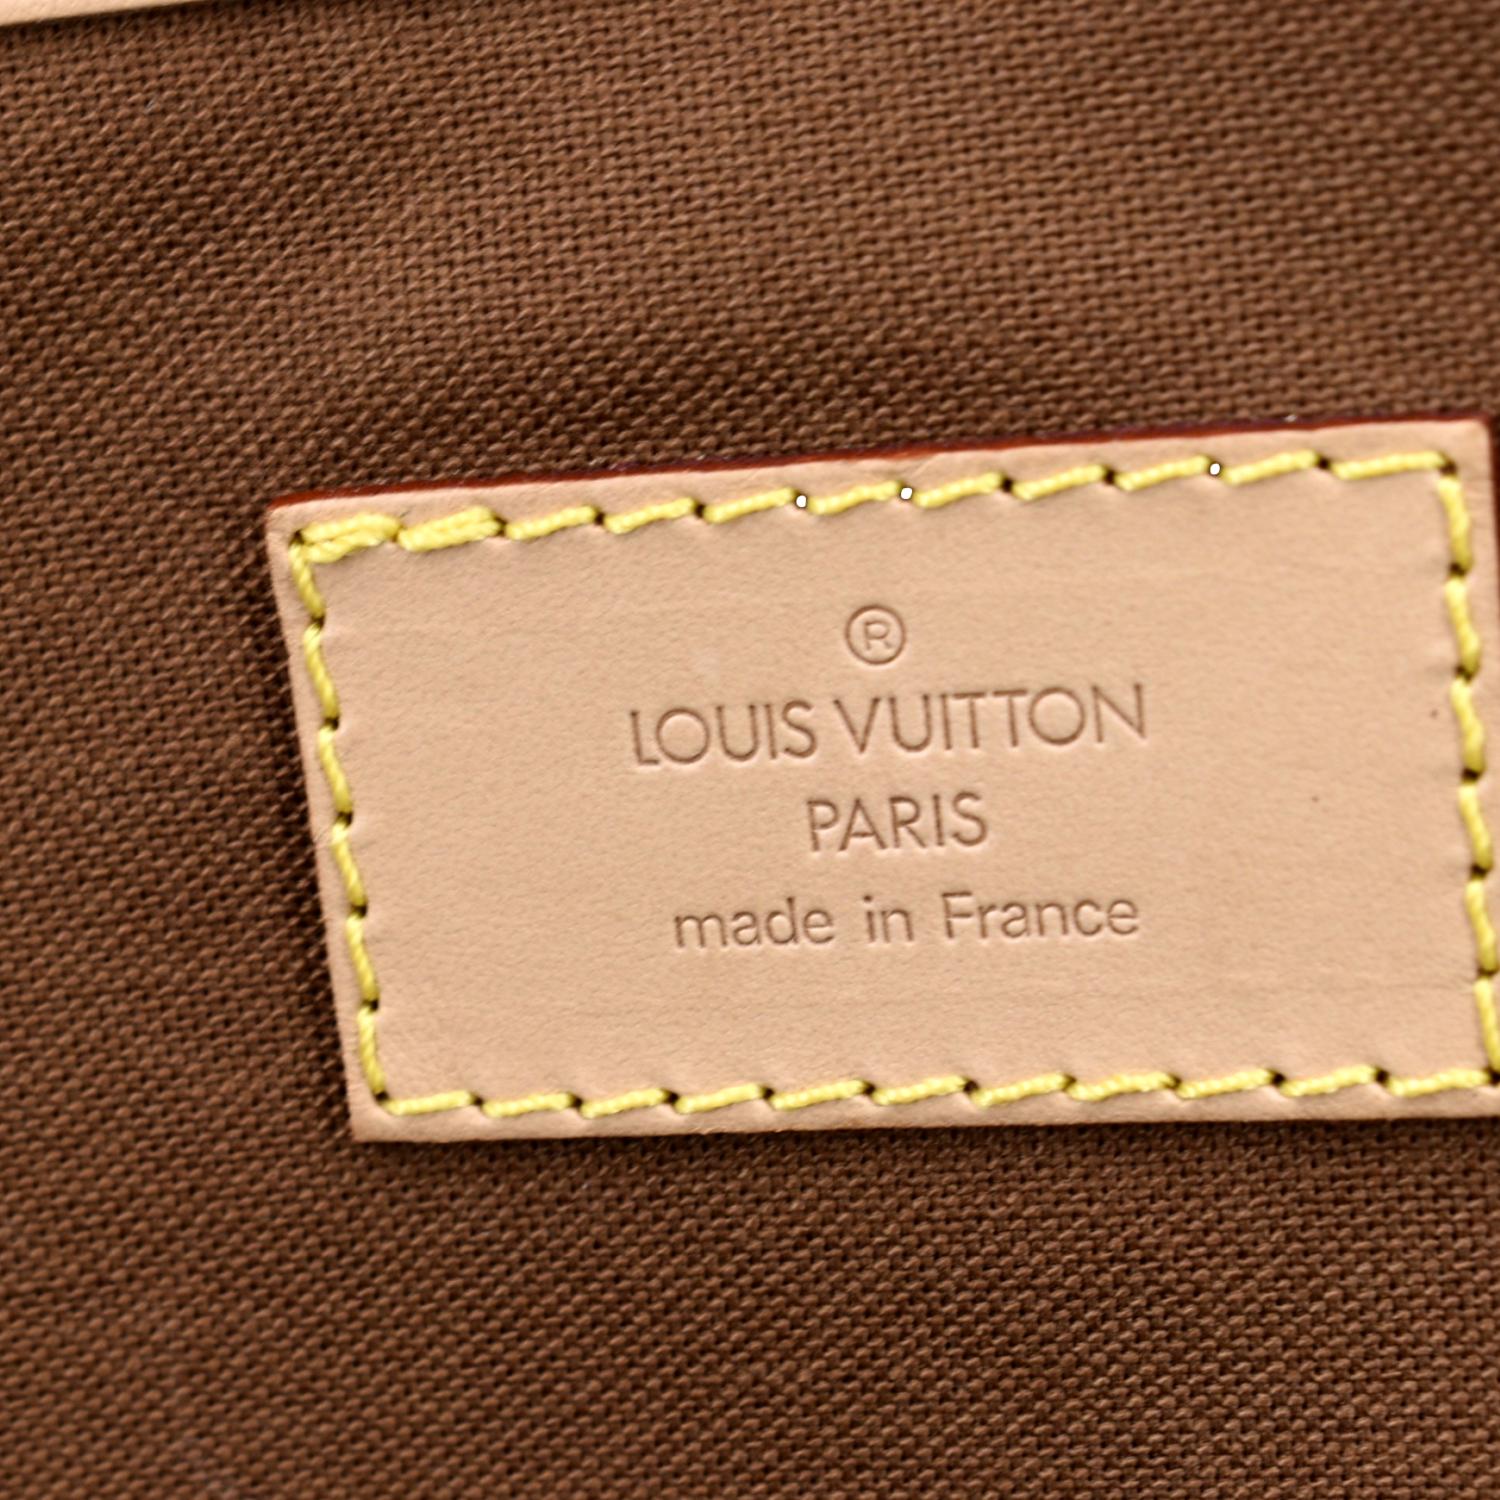 Banananina Product Review: Louis Vuitton Monogram Sirius 45 